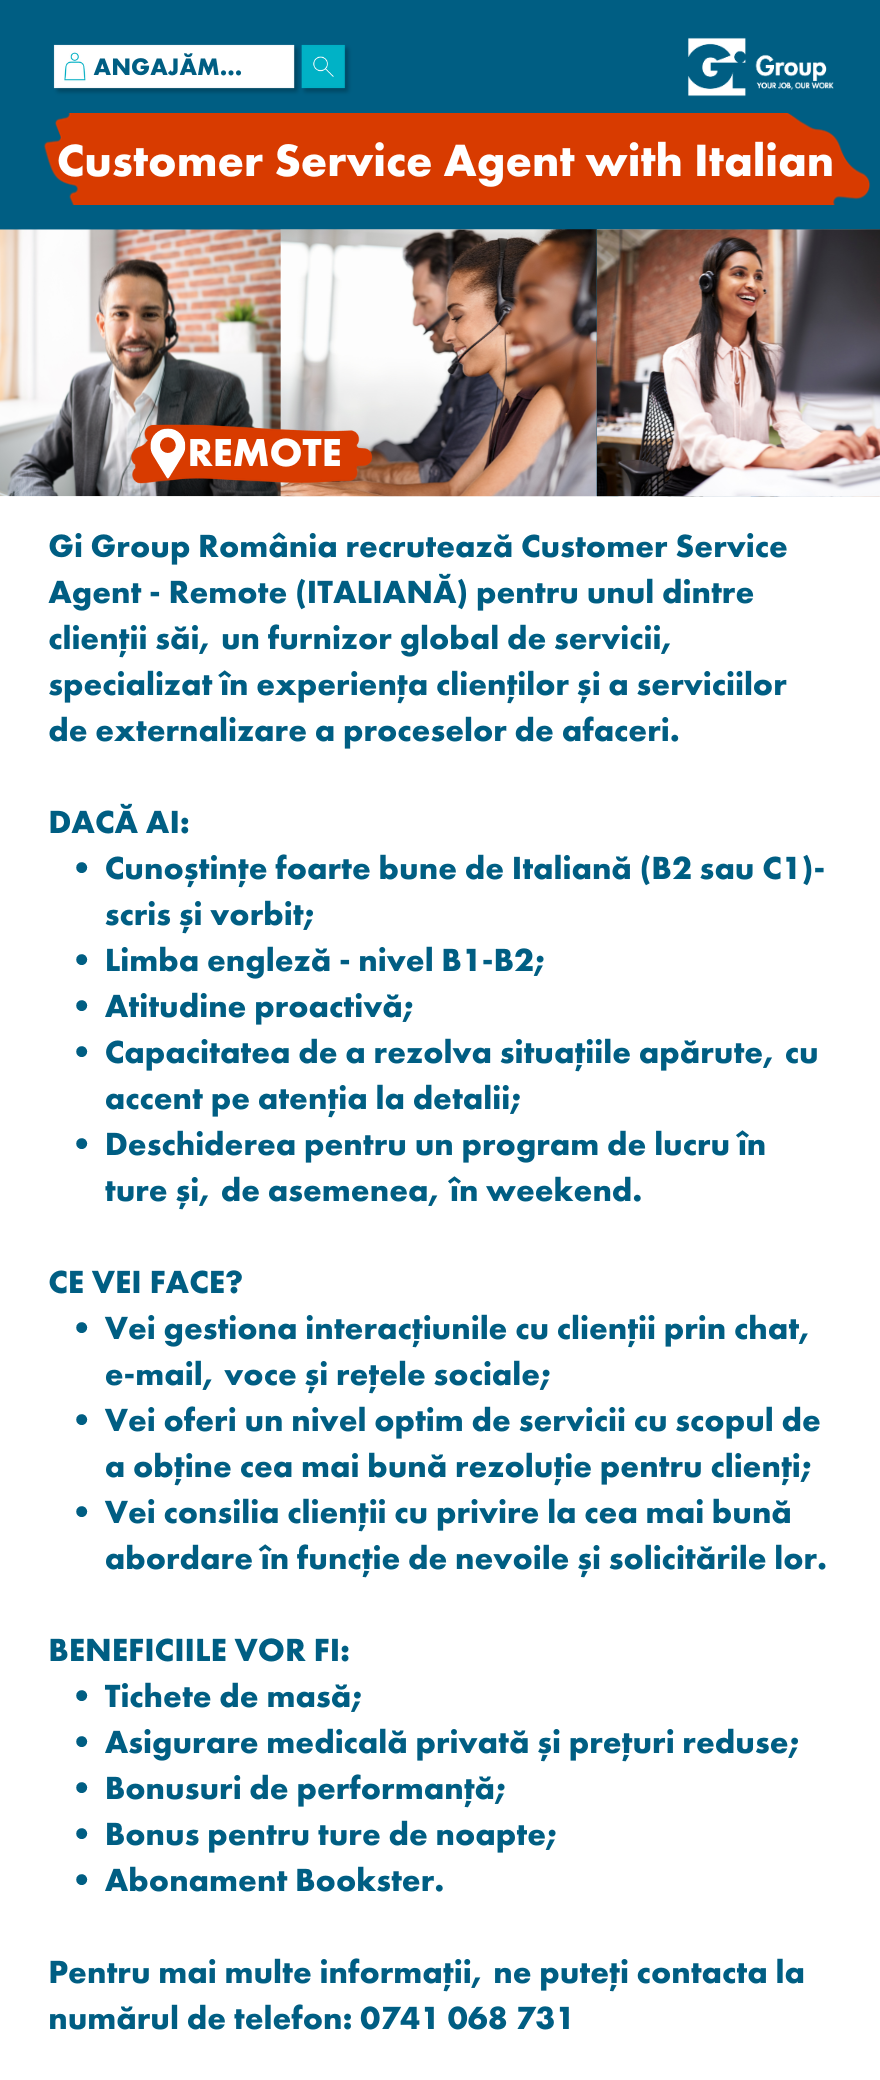 Customer Service Agent - Remote (ITALIANA)